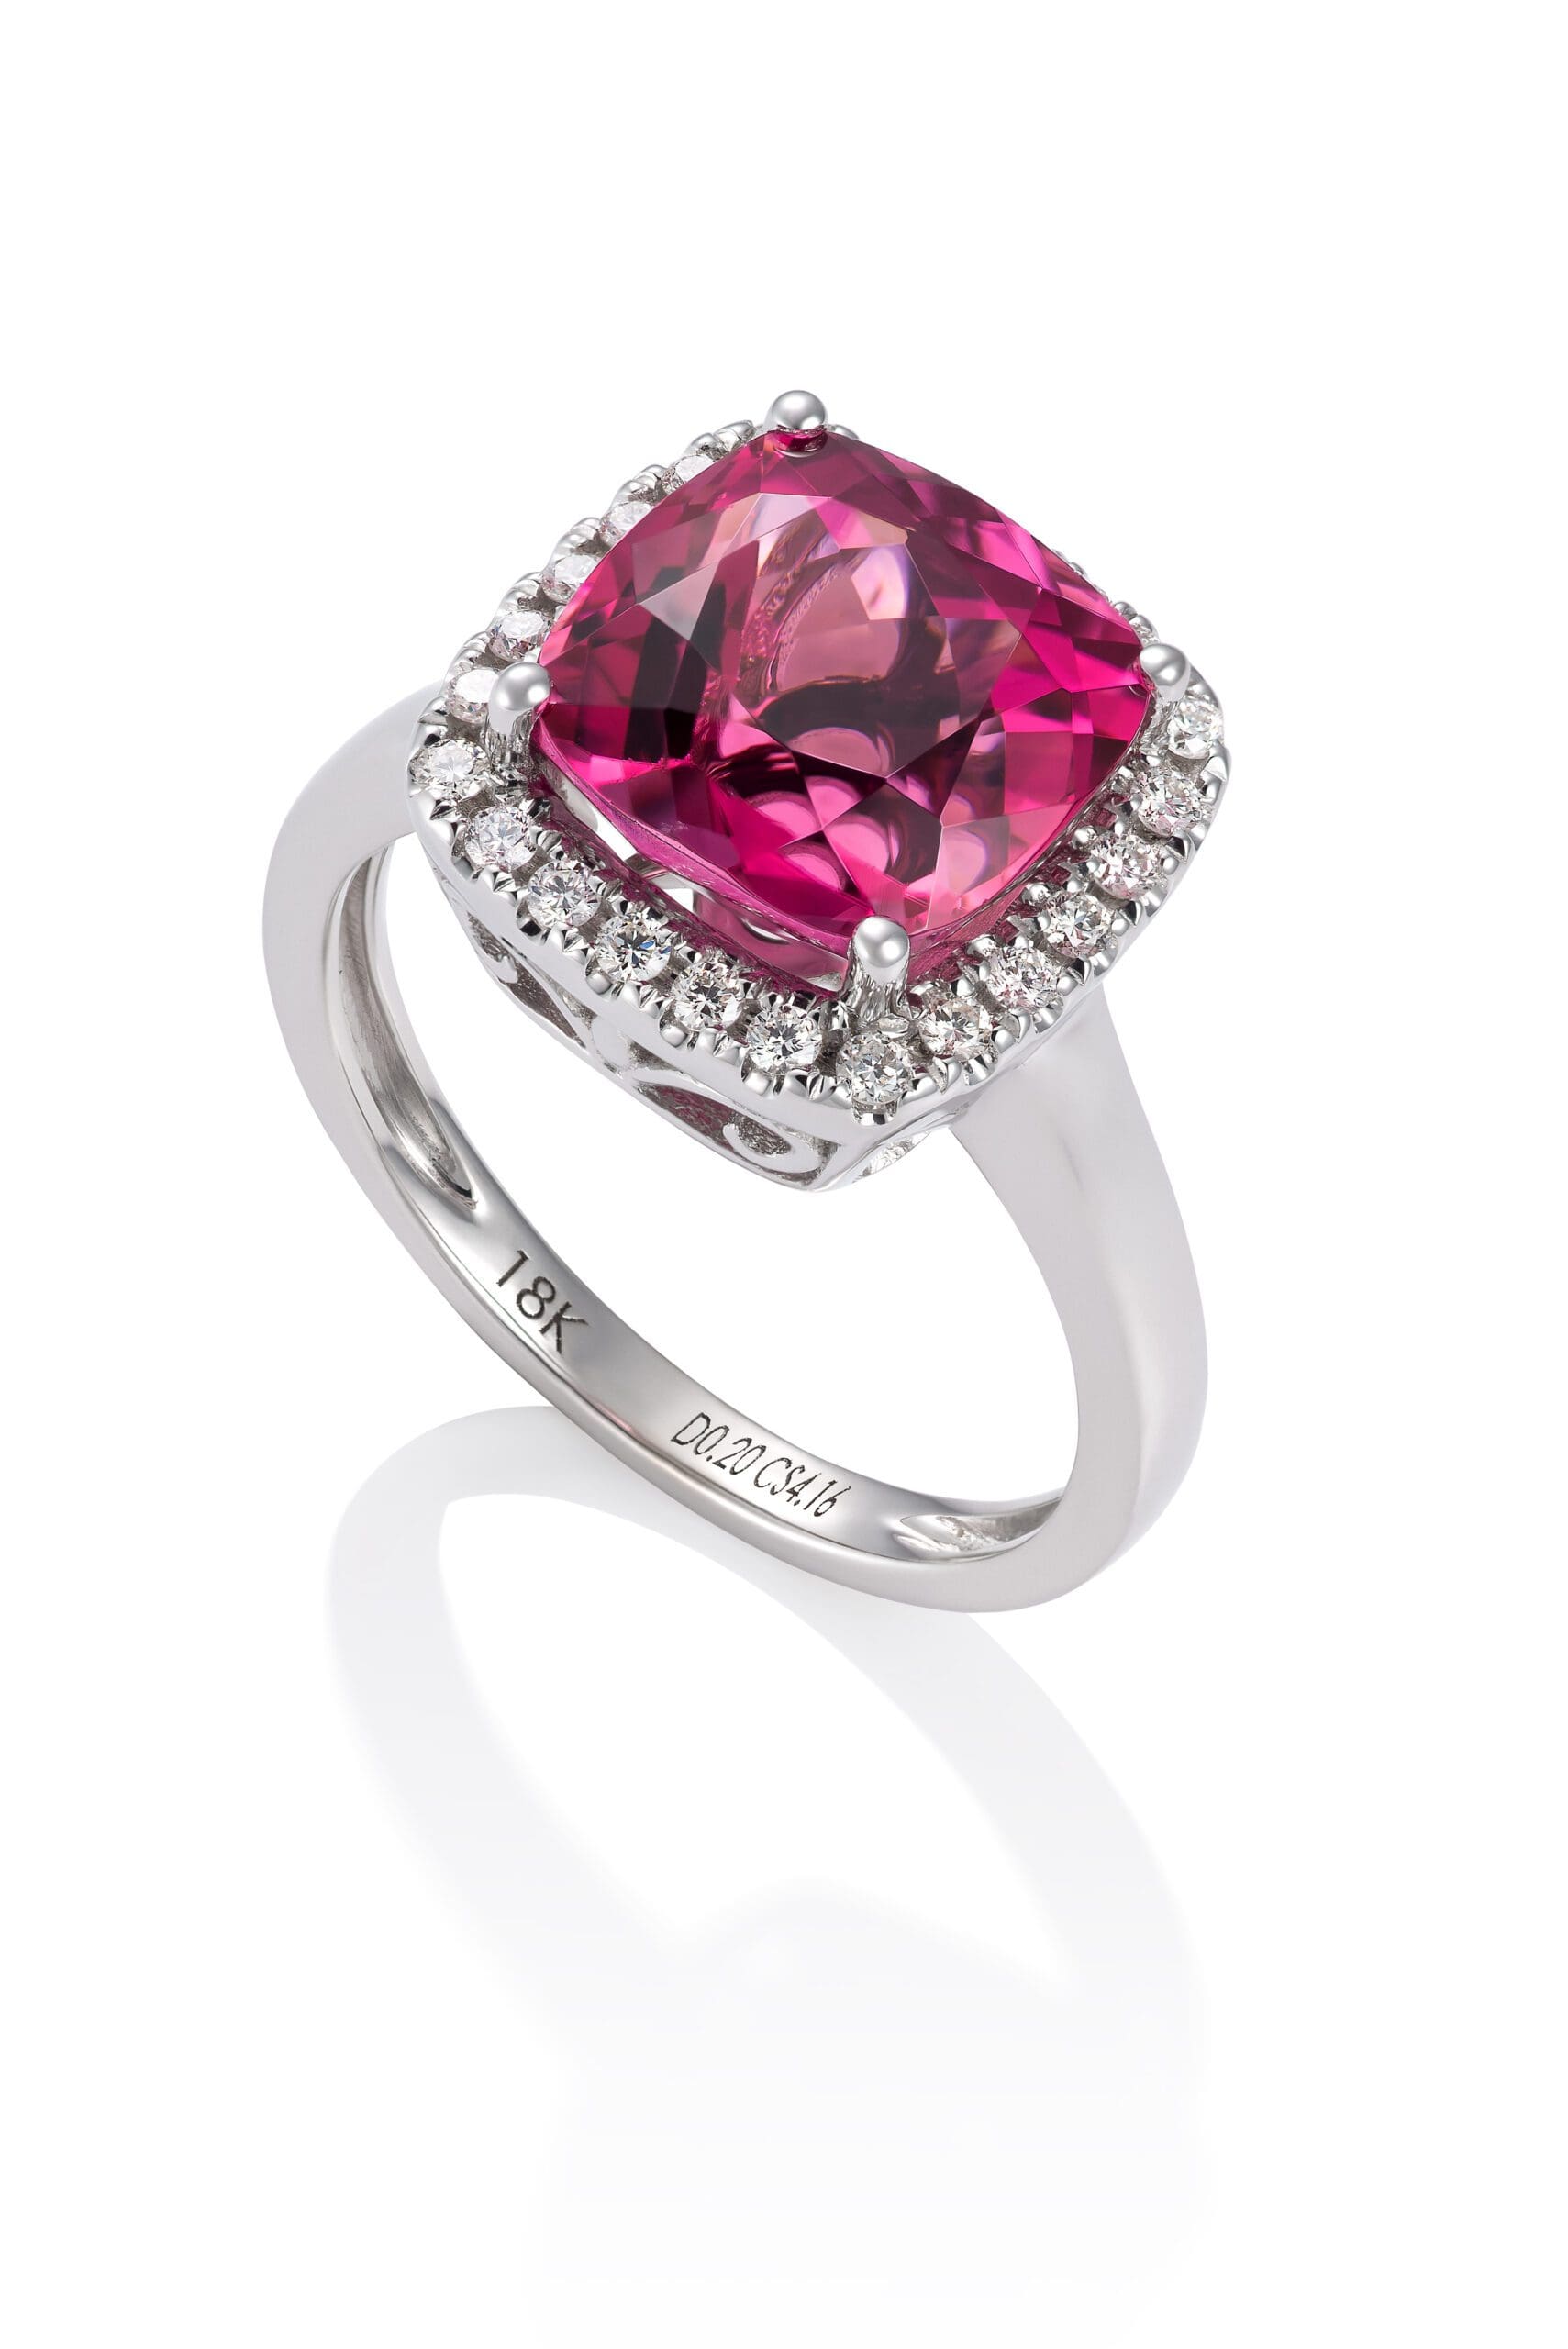 Buy Tourmaline Ring, Emerald Cut Tourmaline Diamond Ring, Classic Tourmaline  Ring, Diamond and Tourmaline Ring, Dark Green Ring W/ Diamonds Online in  India - Etsy